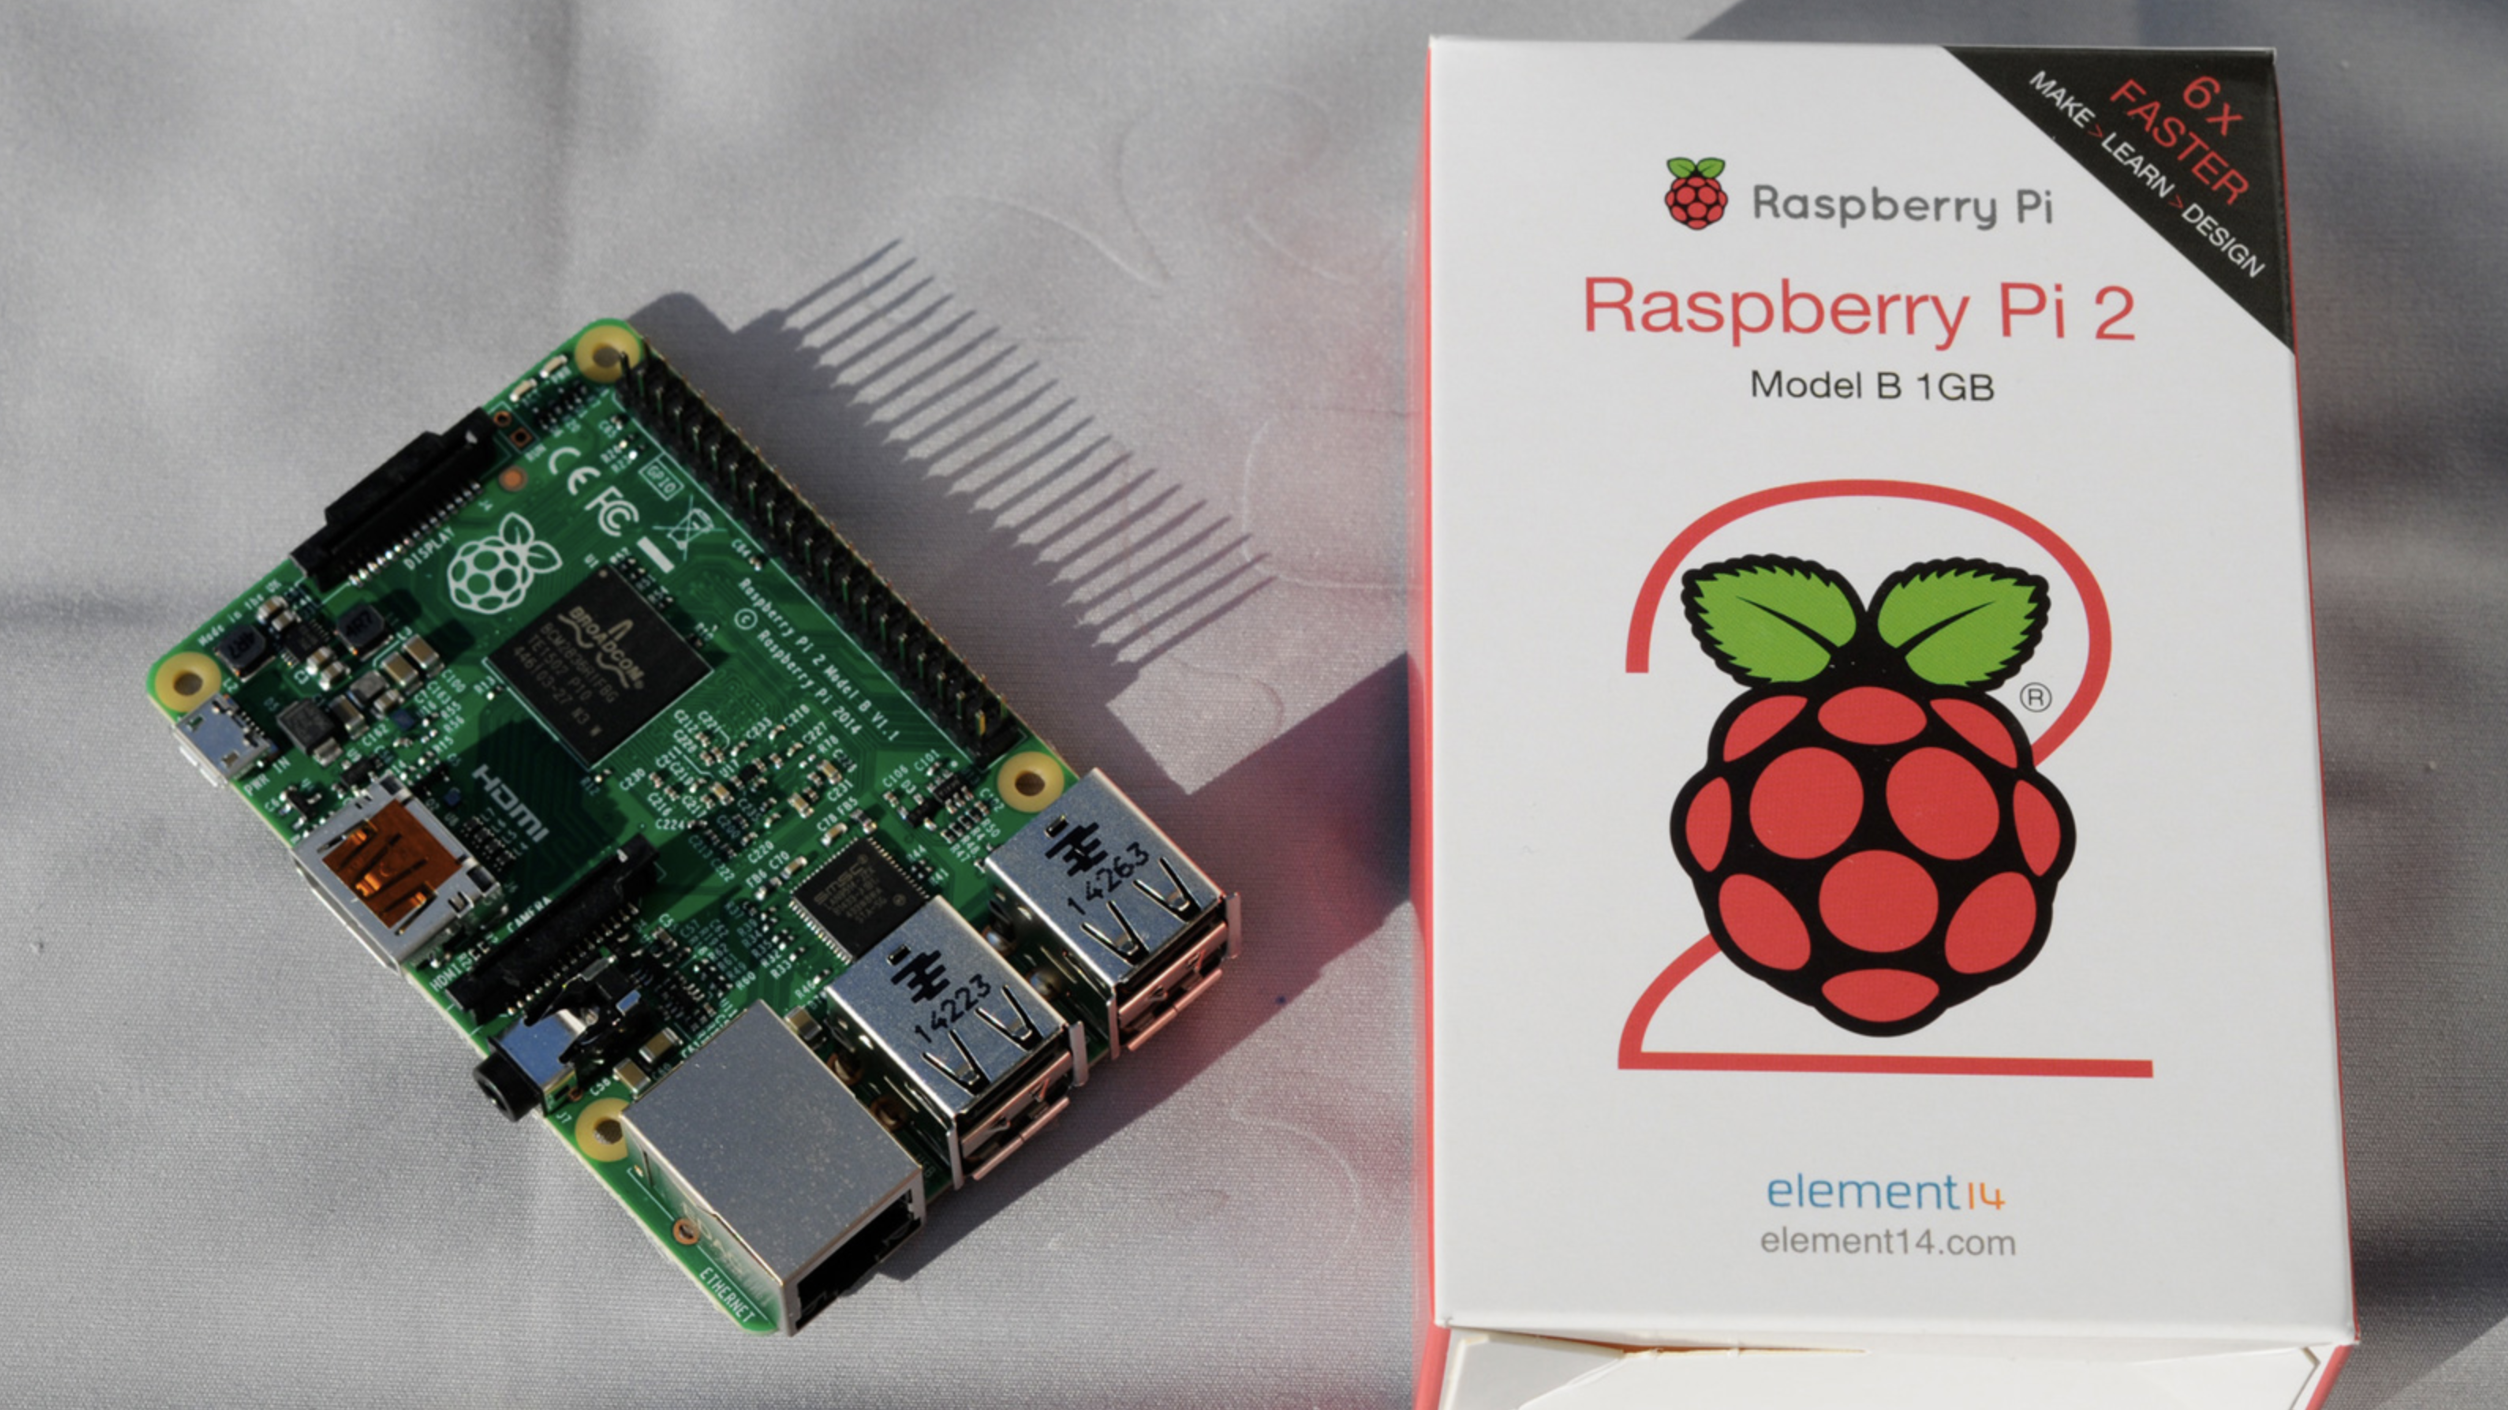 HypriotOS and Docker 1.4.1 on Raspberry Pi 2